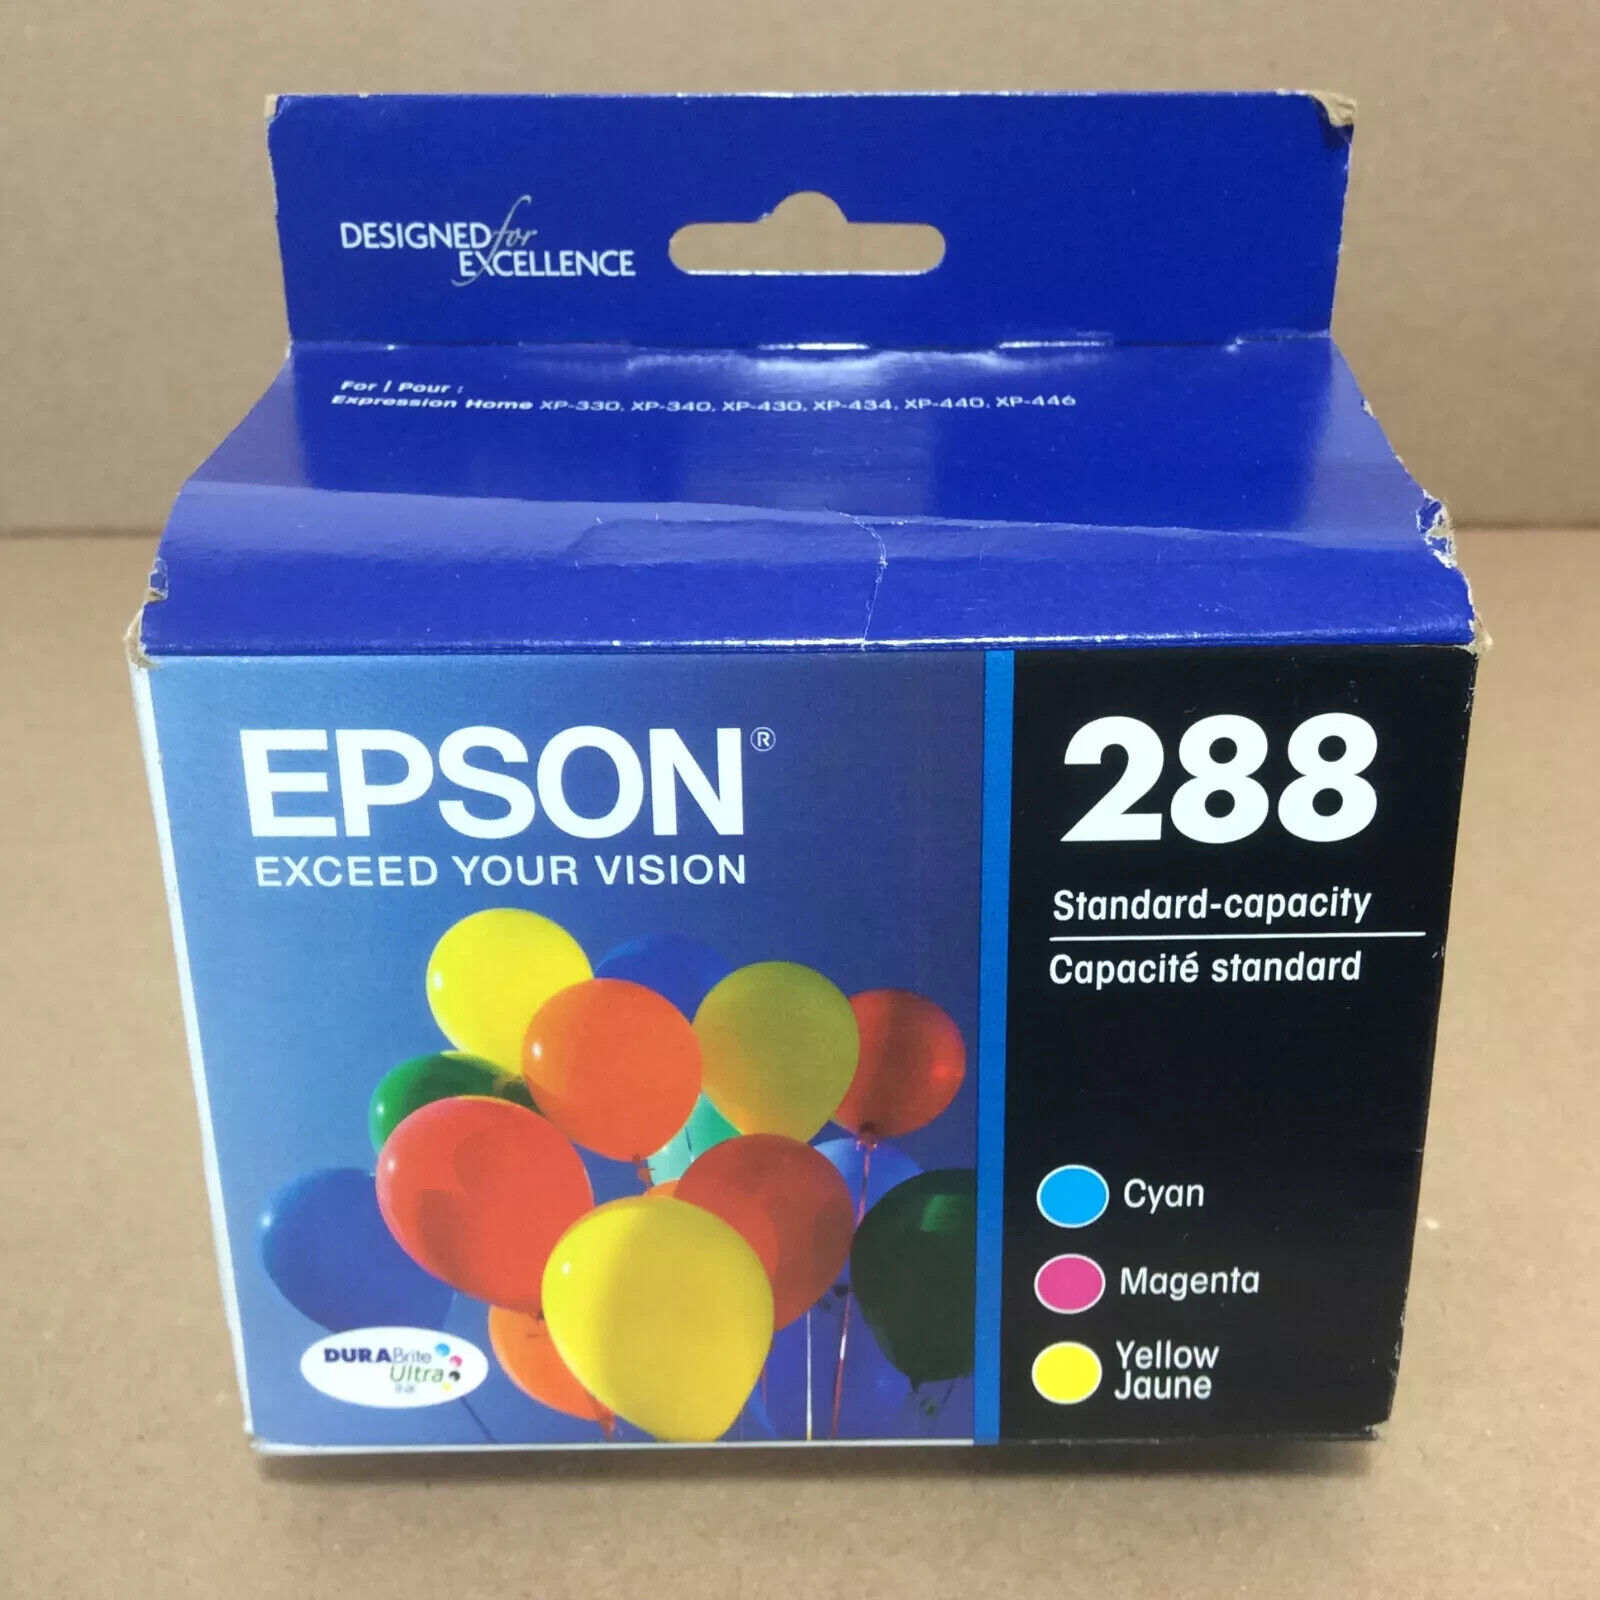 Epson 288 Cyan Magenta Yellow Ink Cartridges T288520 3-Pack Genuine - NEW